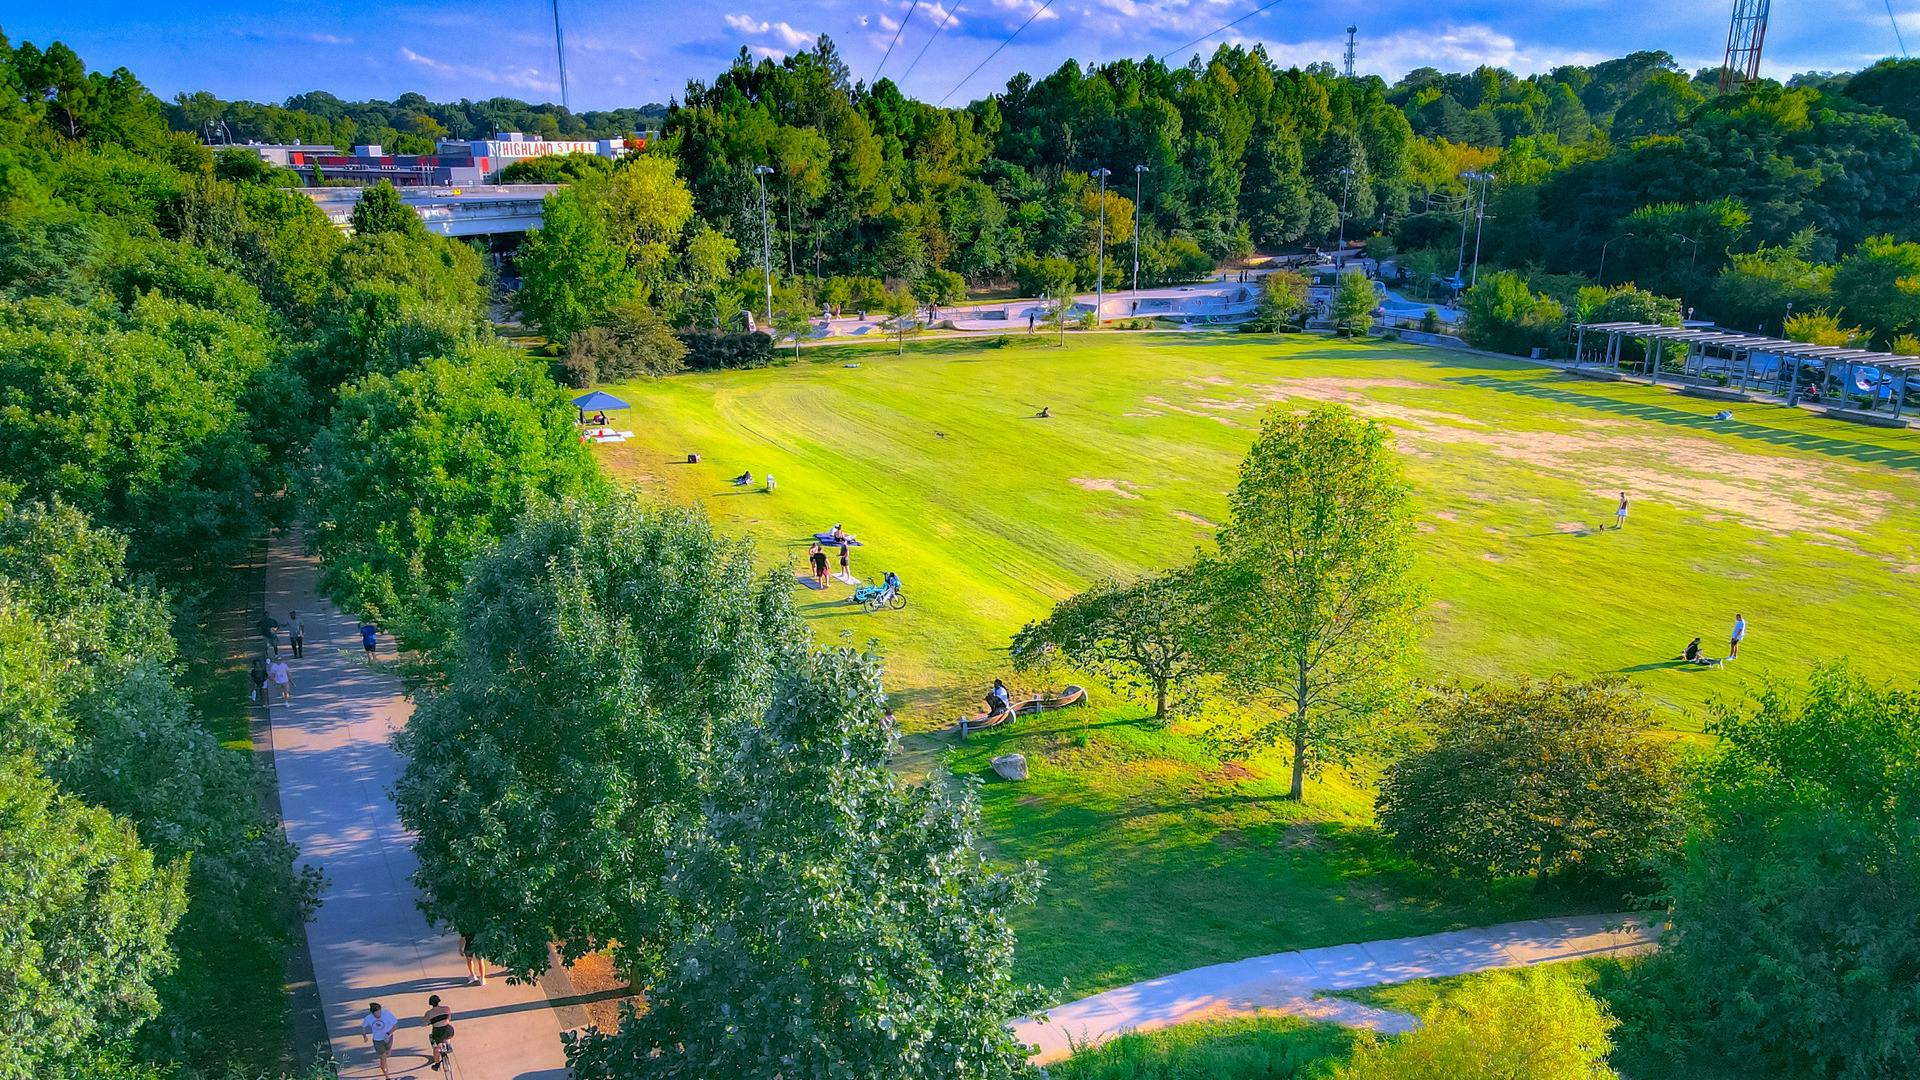 An aerial view of a park showcasing a lush green grass field next to a skatepark.